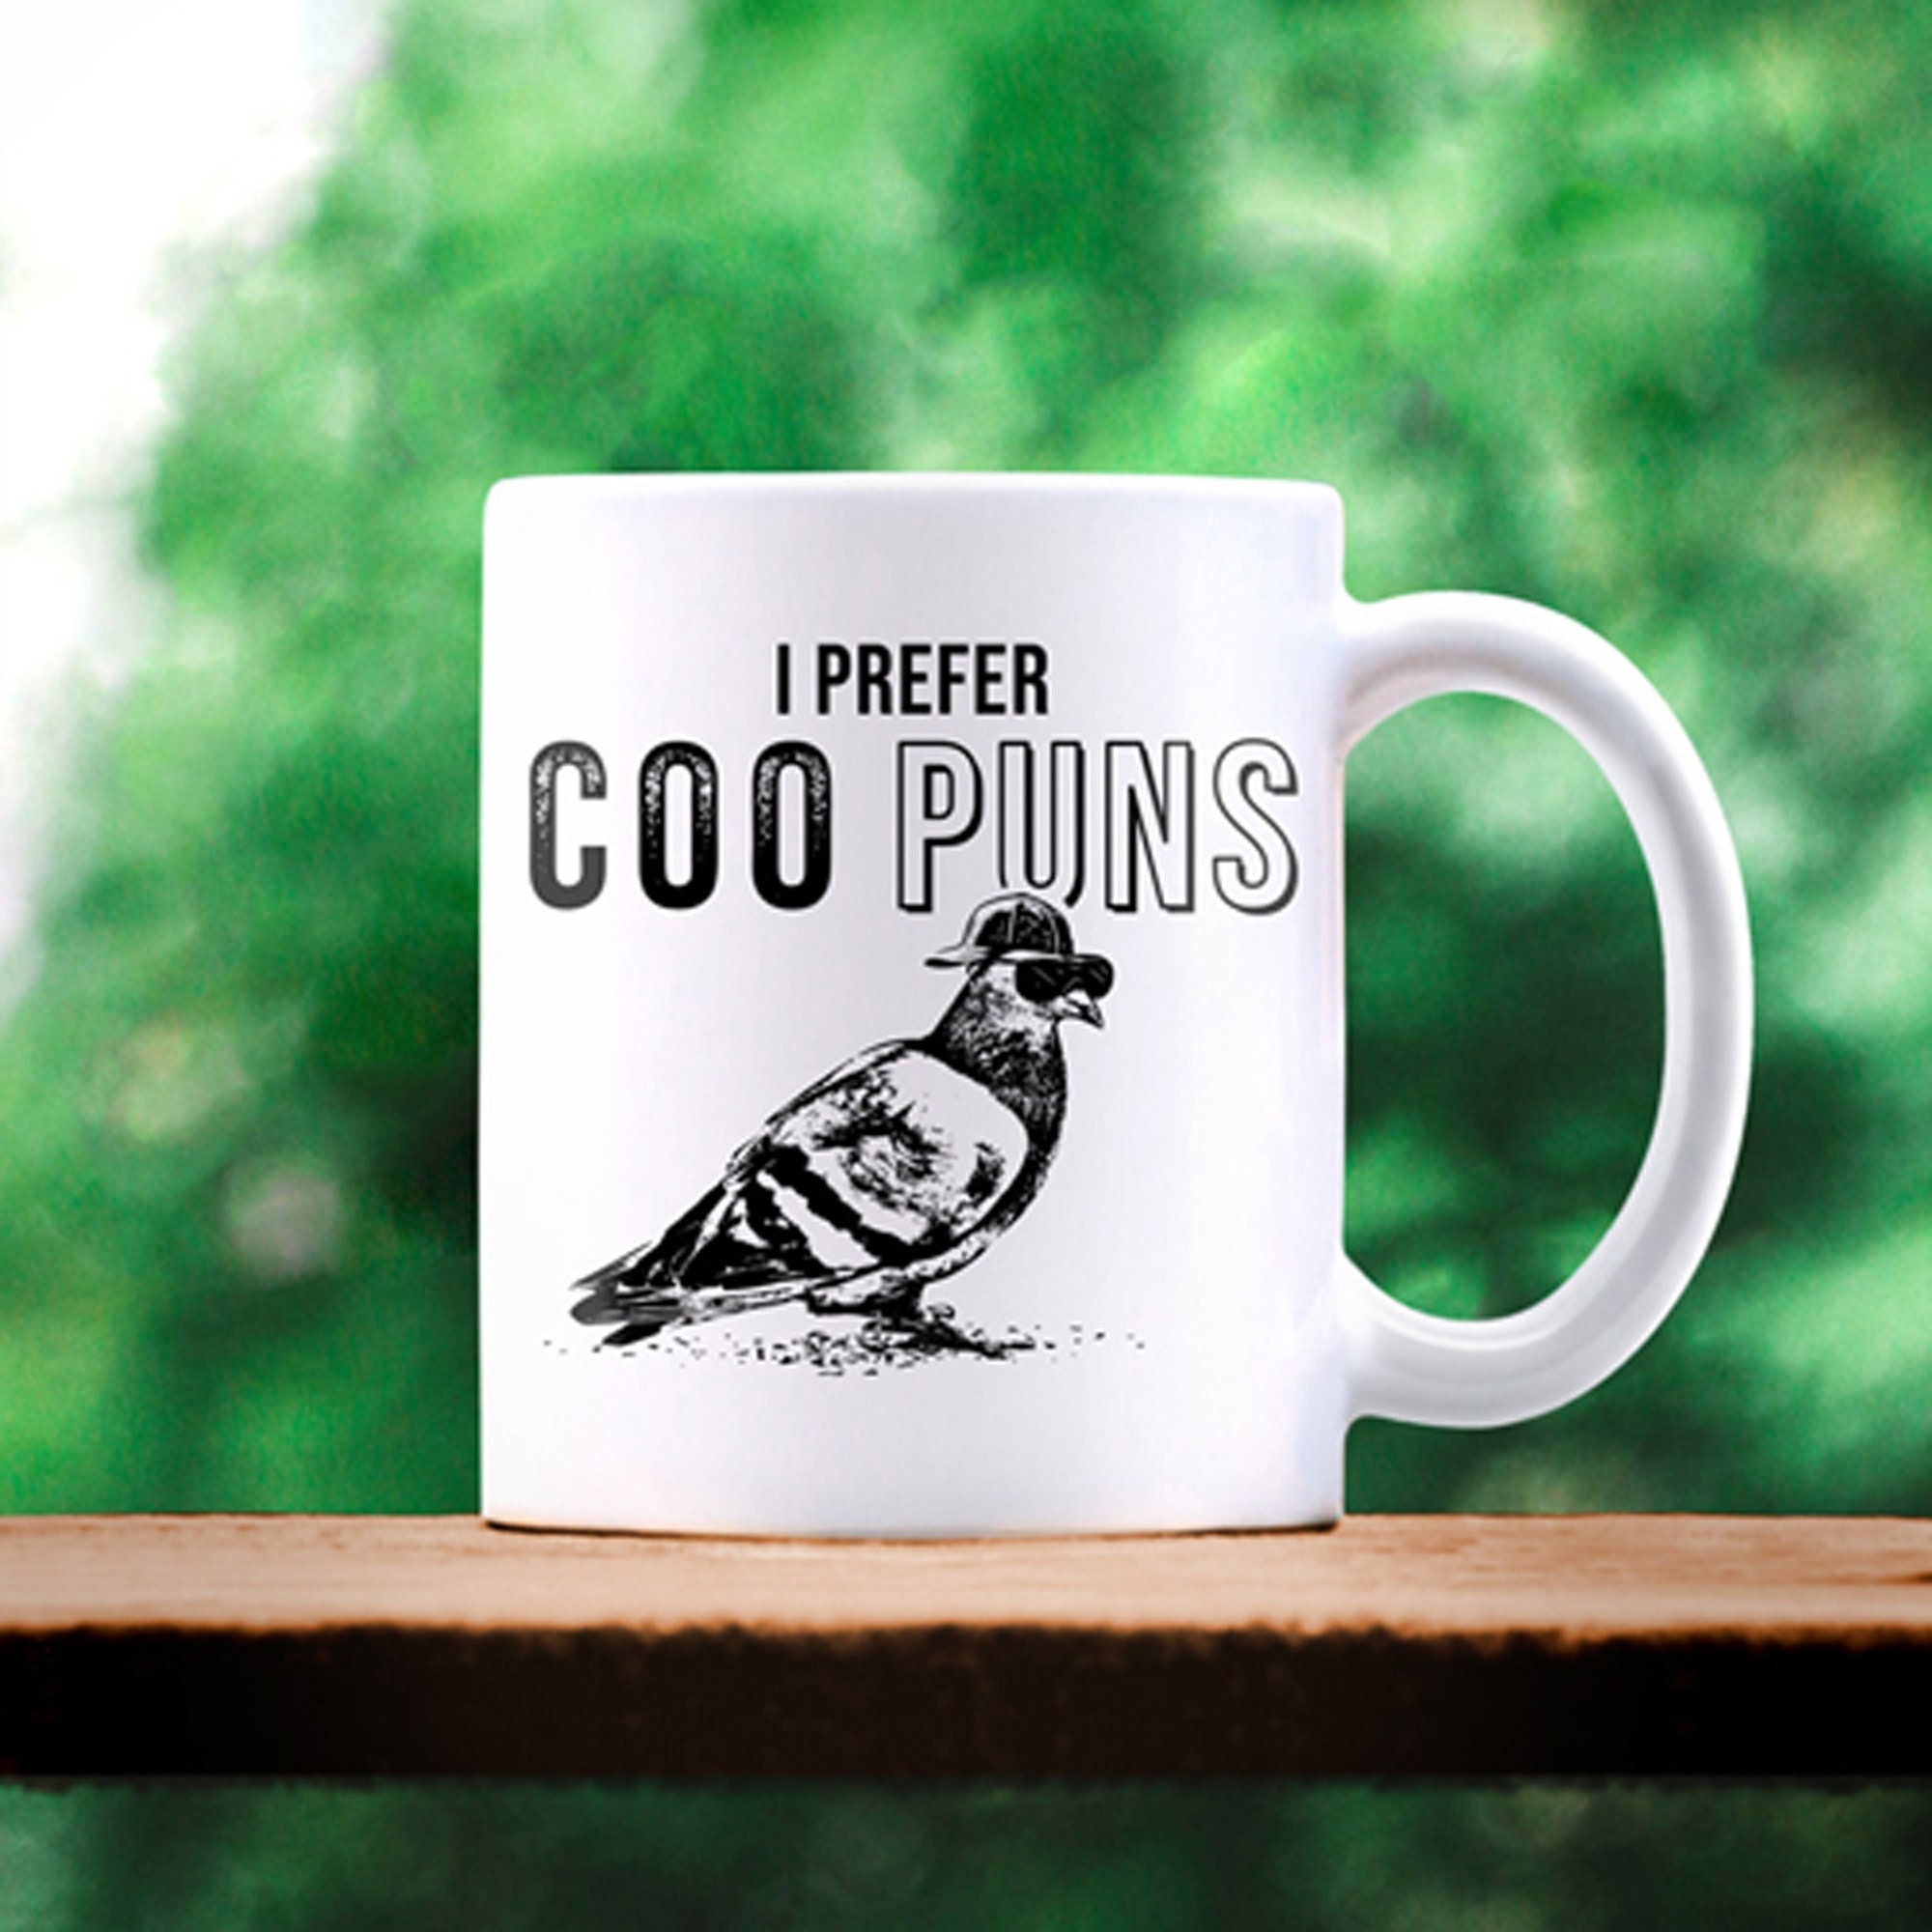 Birdee Ceramic Coffee Mugs - Set of 2 Cute Bird Designs Coffee Cup